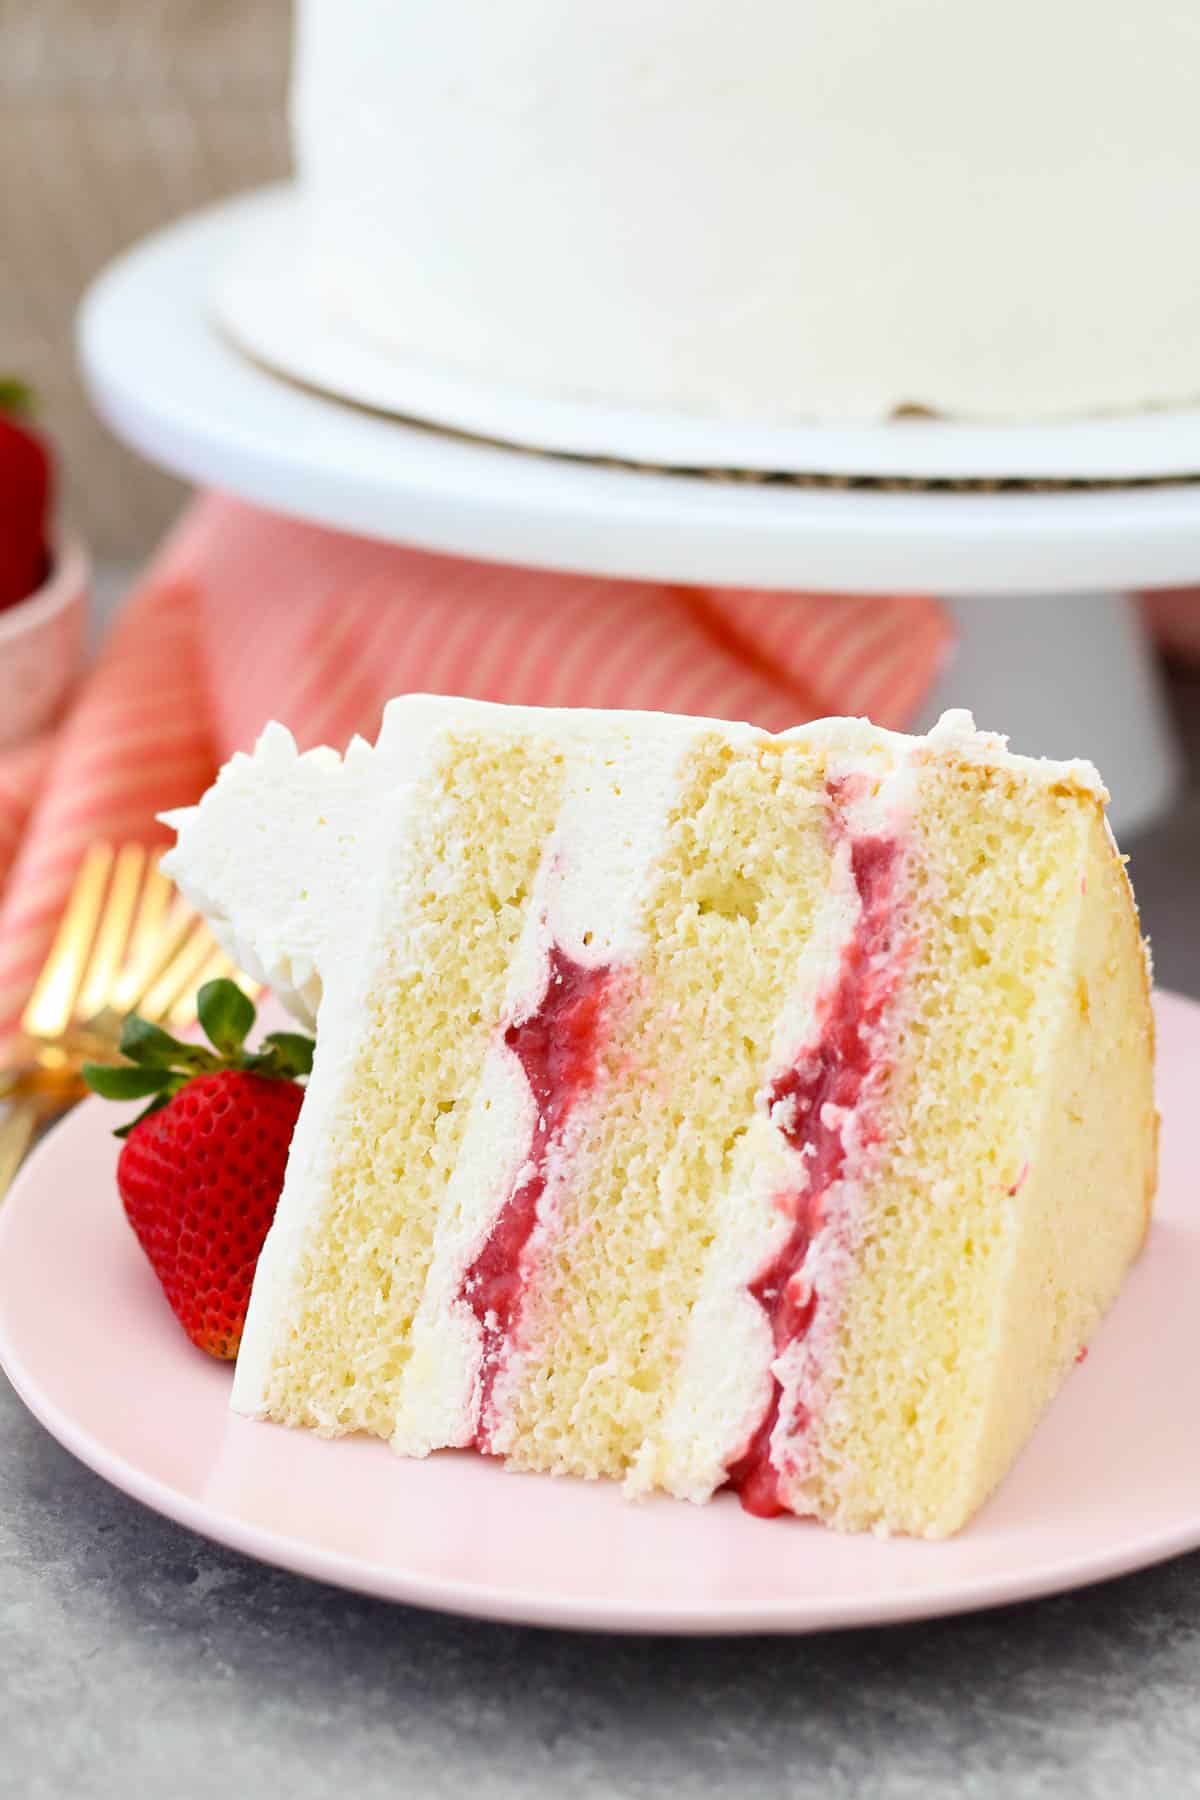 A slice of strawberry mascarpone cake on a pink plate.